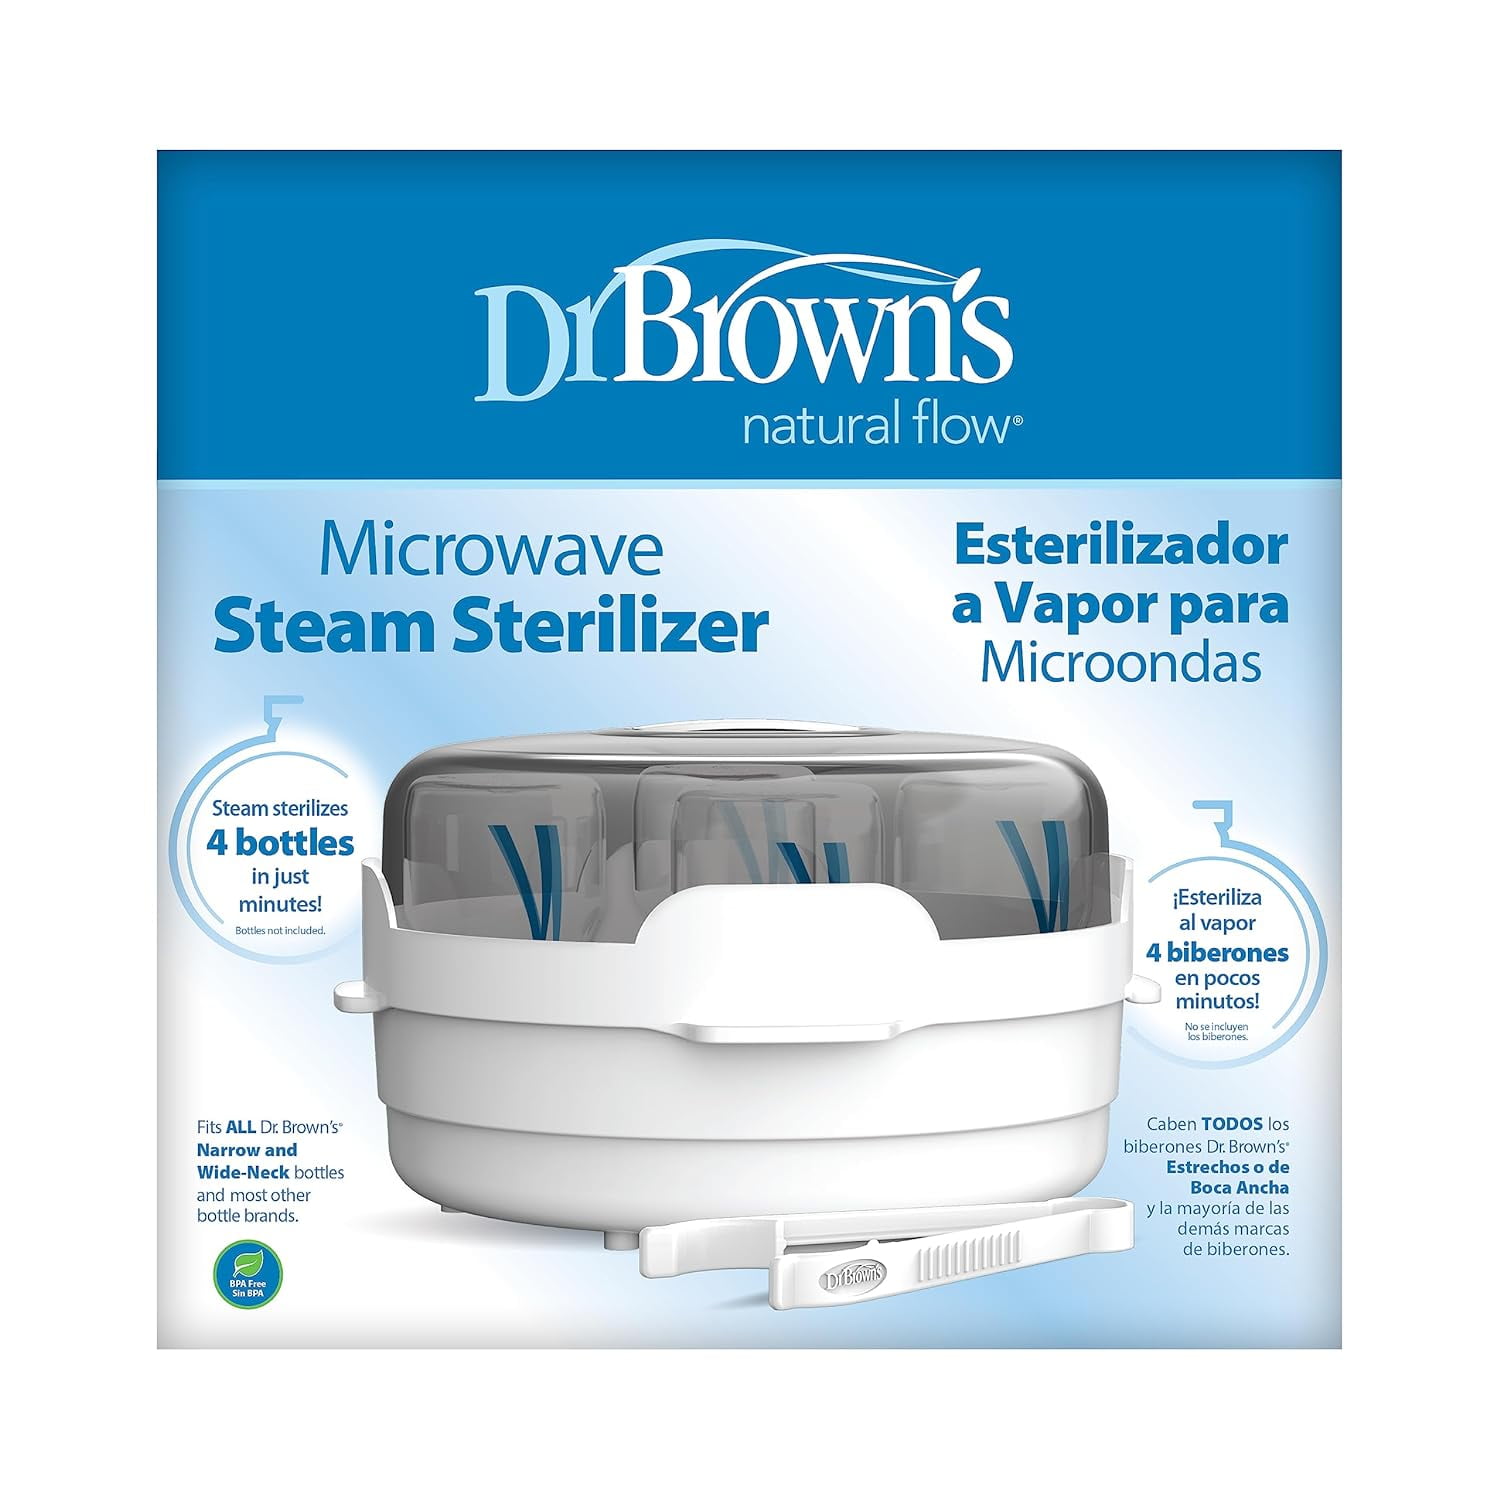 Dr Browns Natural Flow Microwave Steam Sterilizer